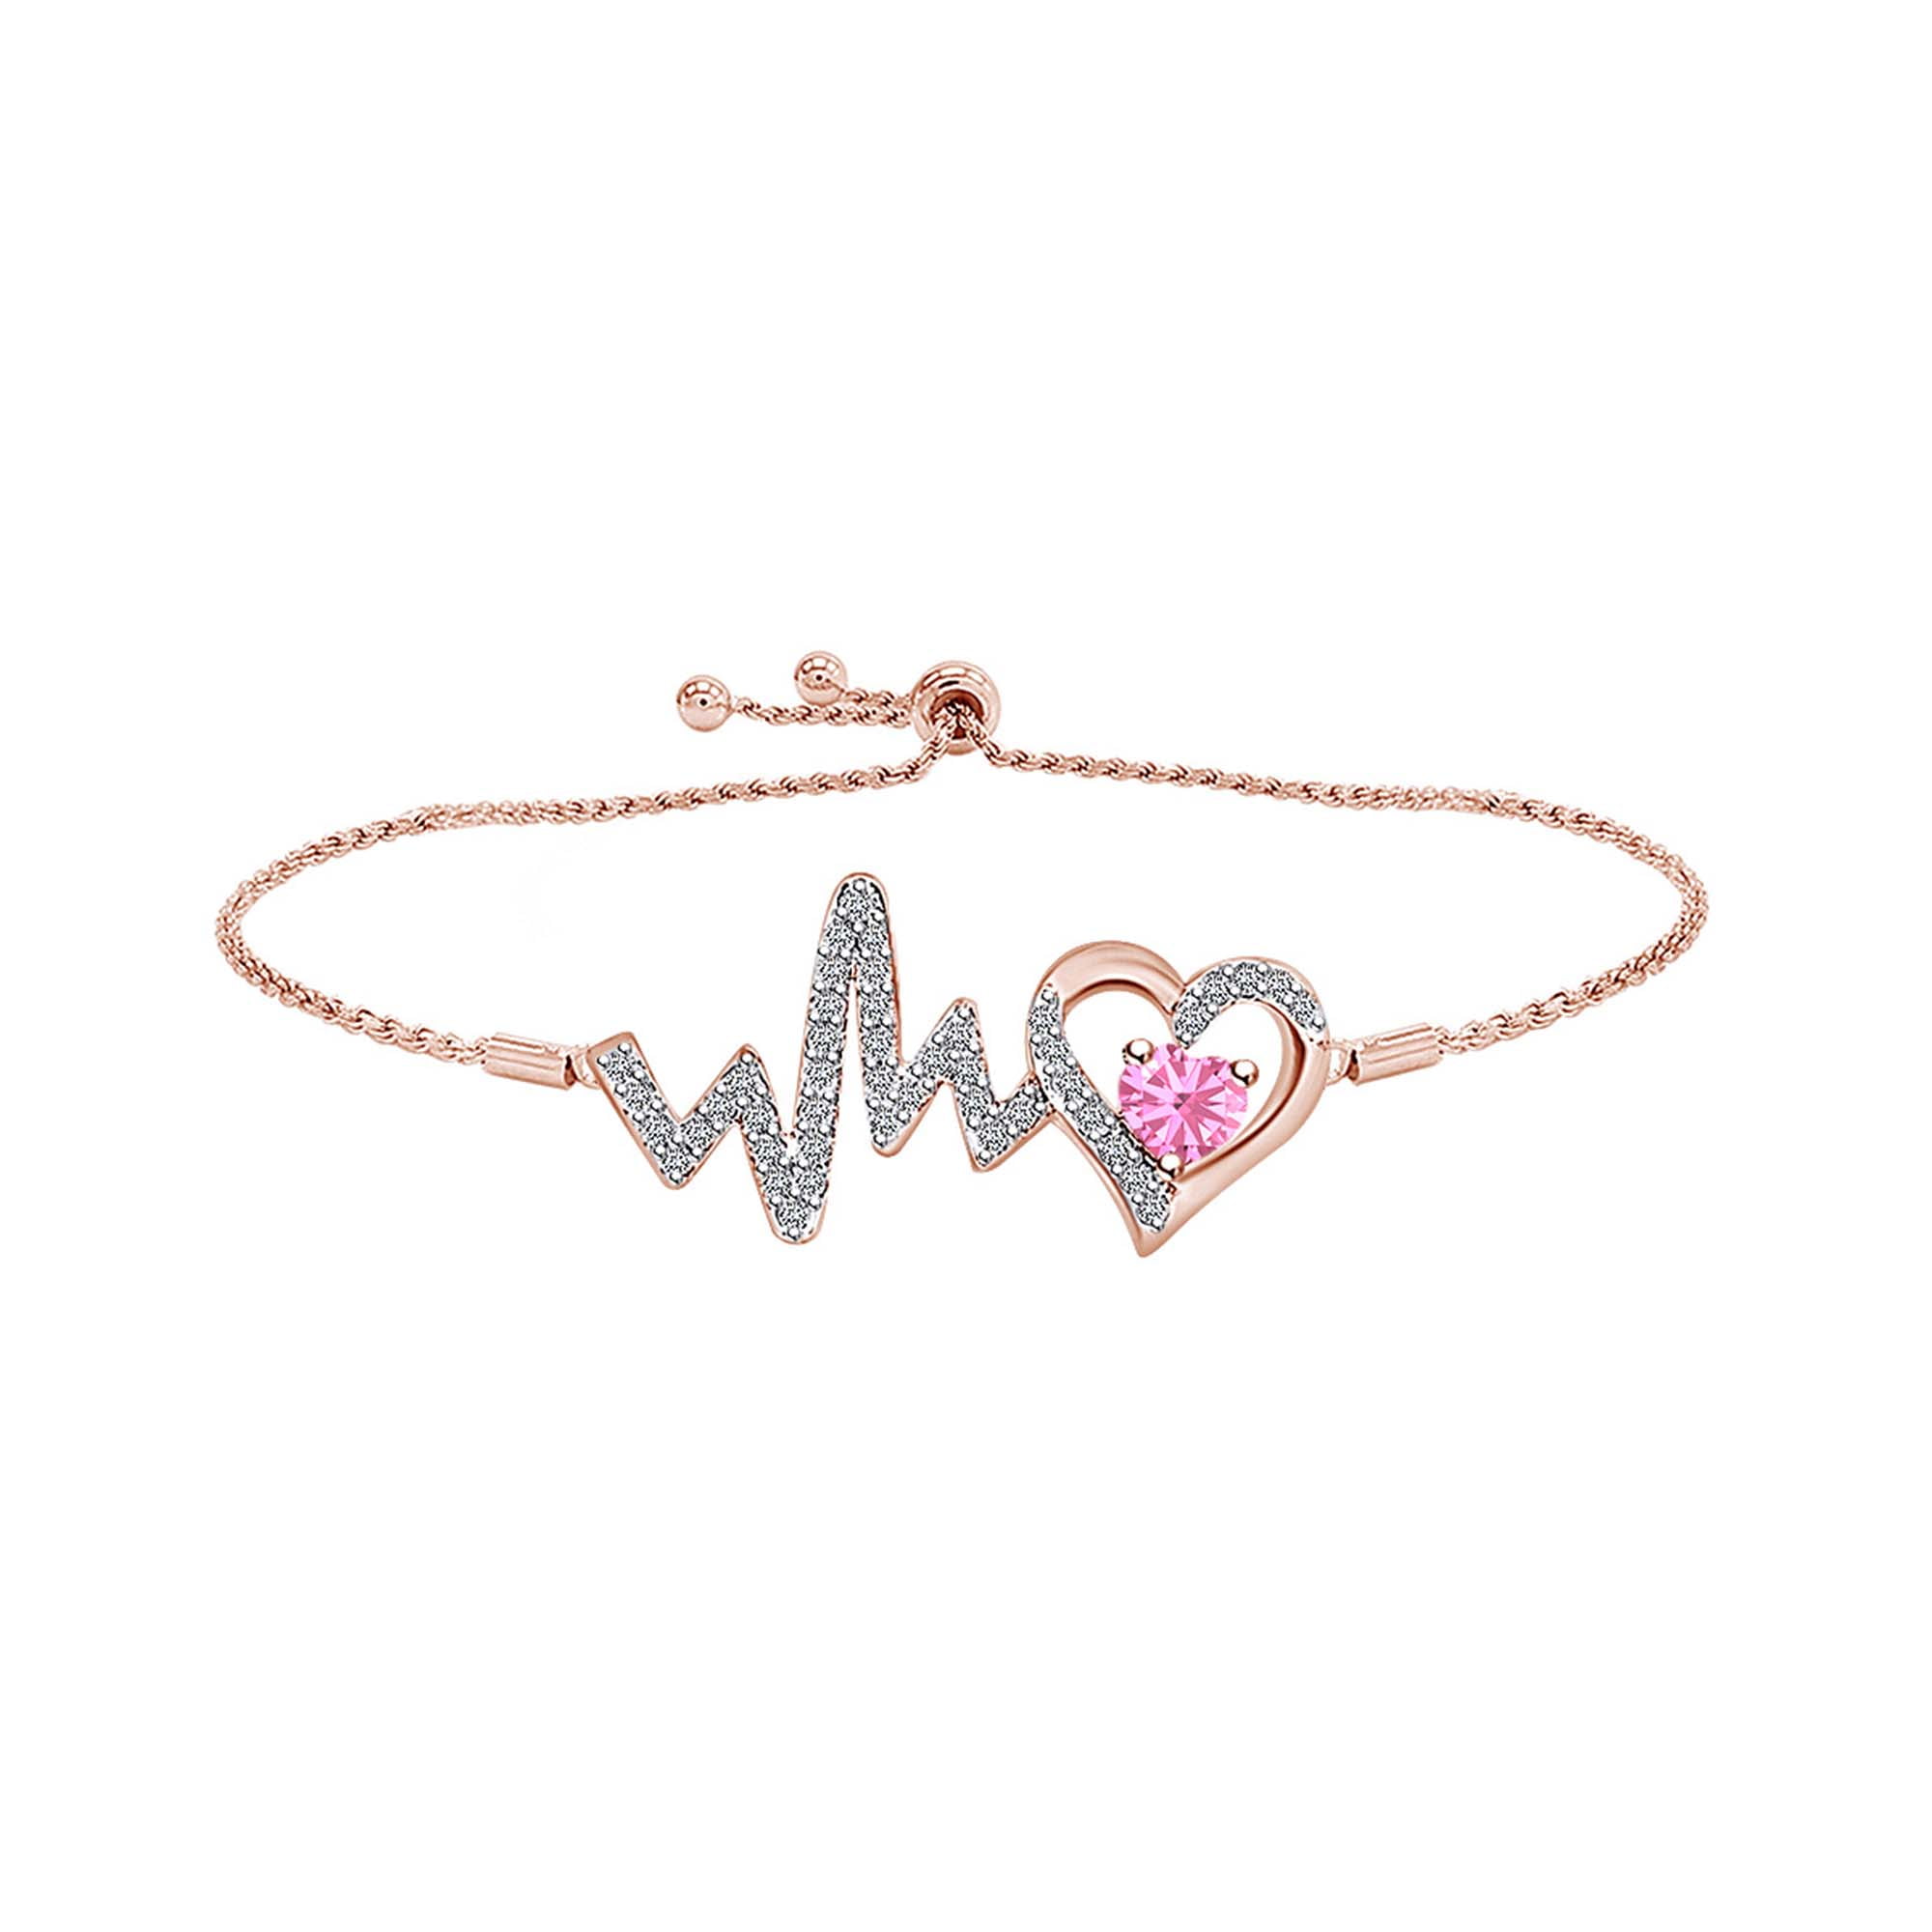 Buy AHK Gold Color Stylish Design Heartbeat Necklace Bracelet at Amazonin